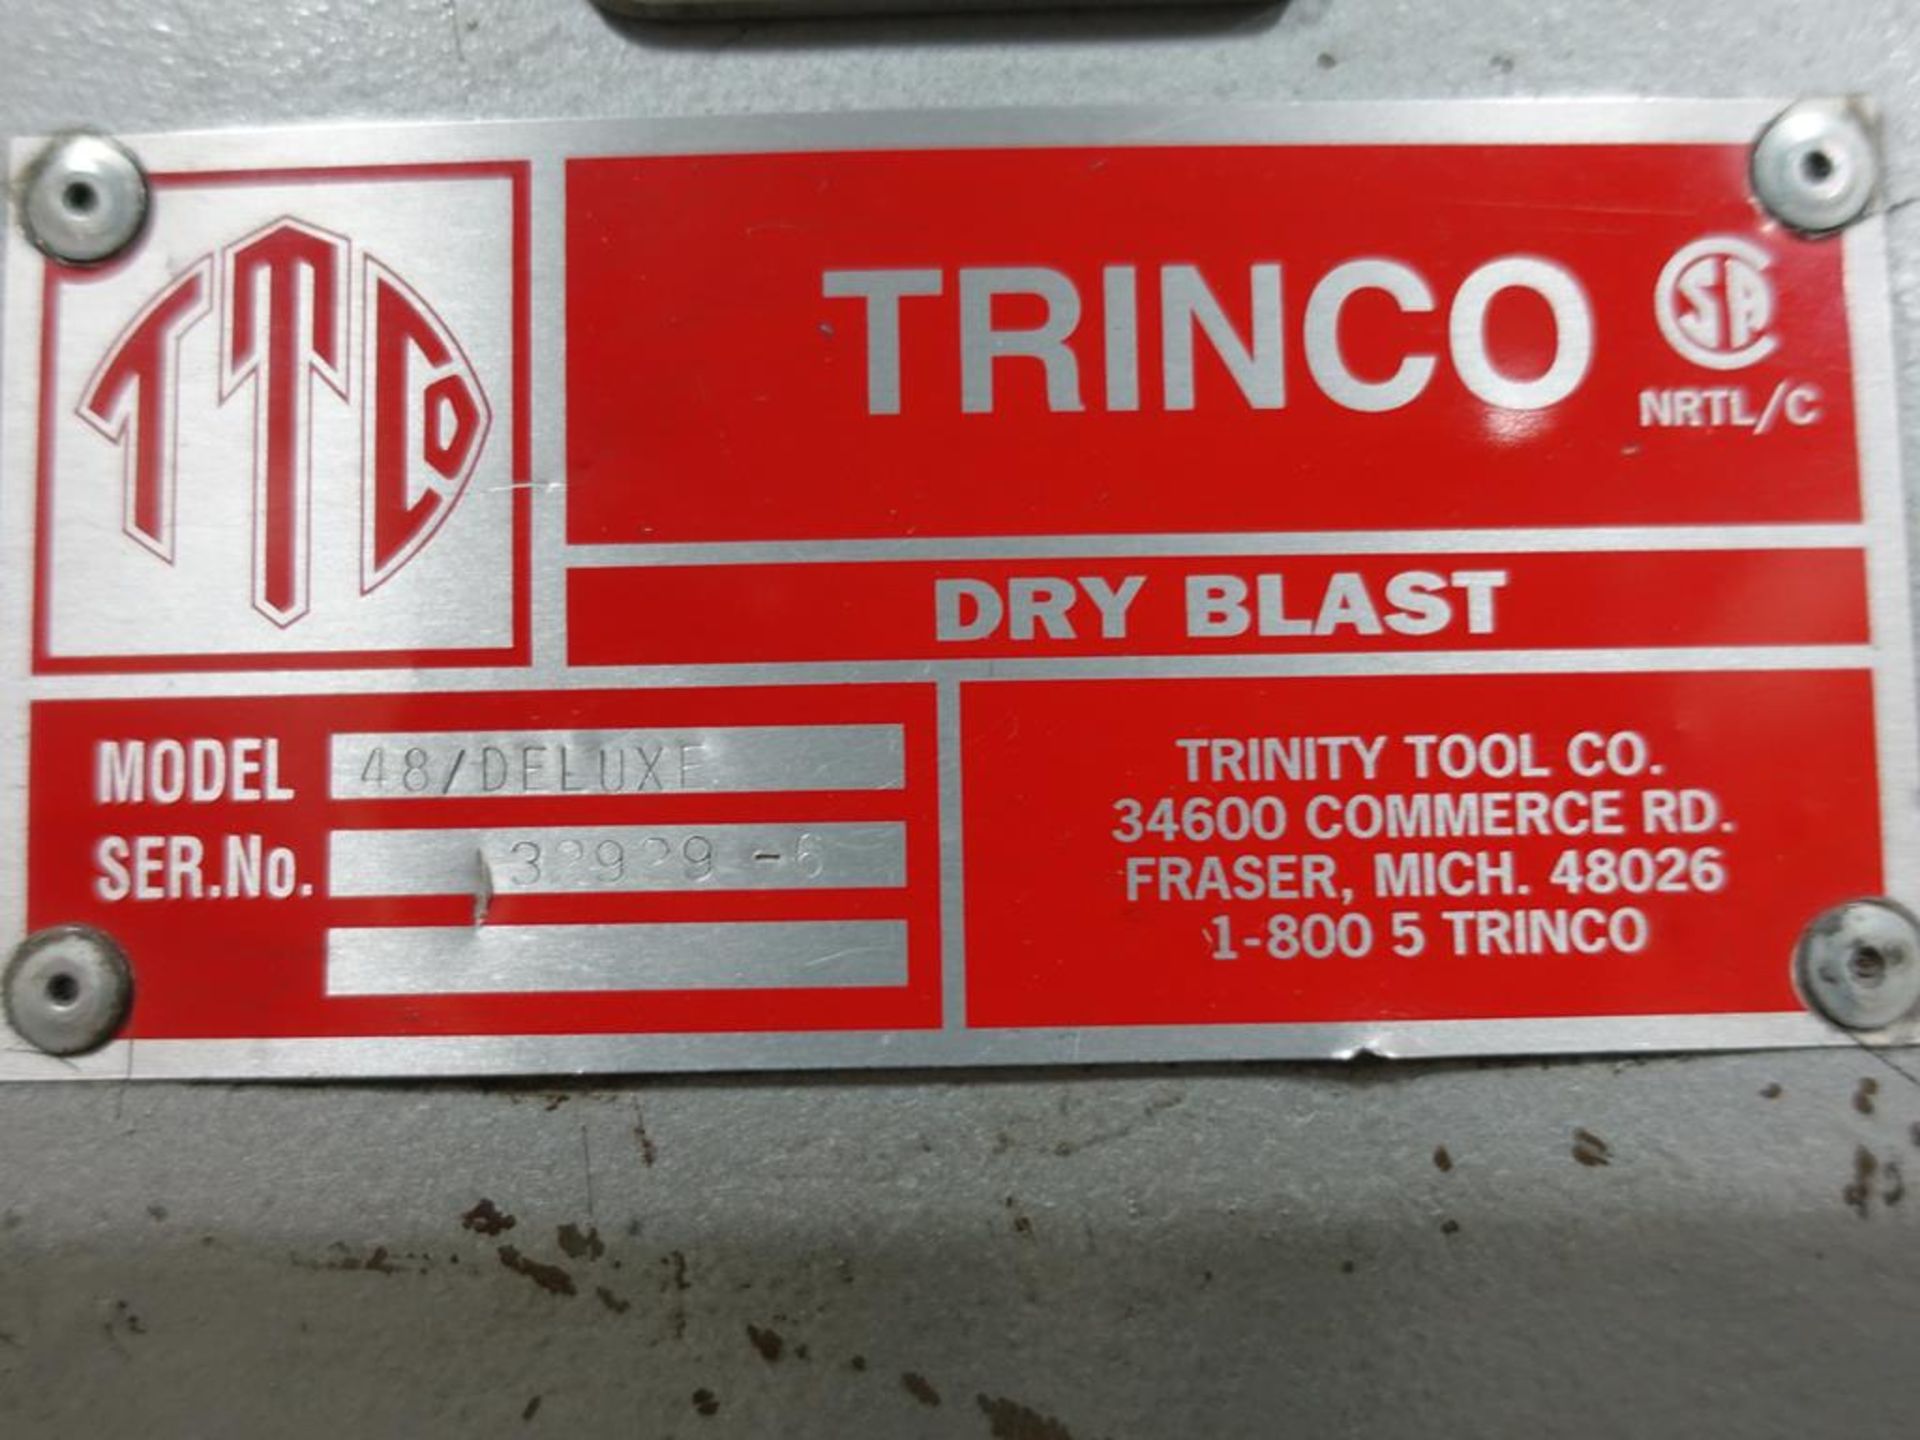 TRINCO, 48/DELUXE, SANDBLAST CABINET, S/N 33939-6 WITH TRINCO, DEDC, DRY BLAST, DUST COLLECTOR - Image 3 of 4